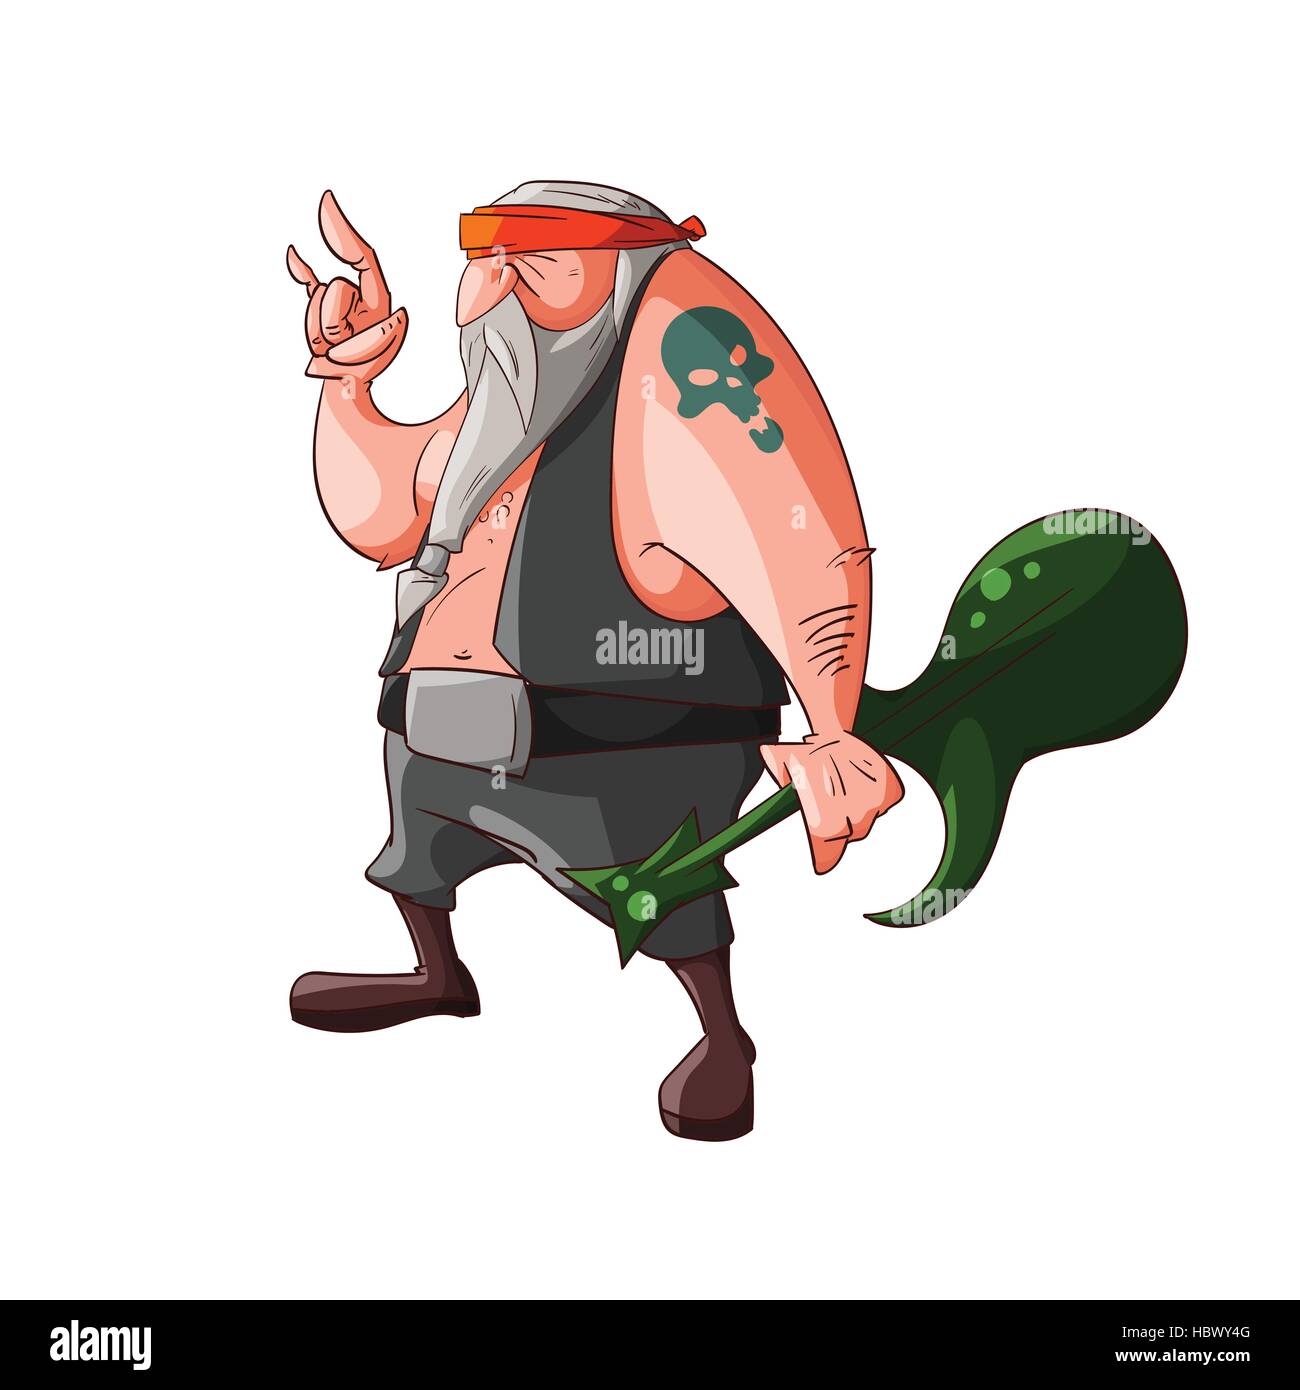 Colorufl vector illustration of a cartoon rocker, biker or gang member Stock Vector